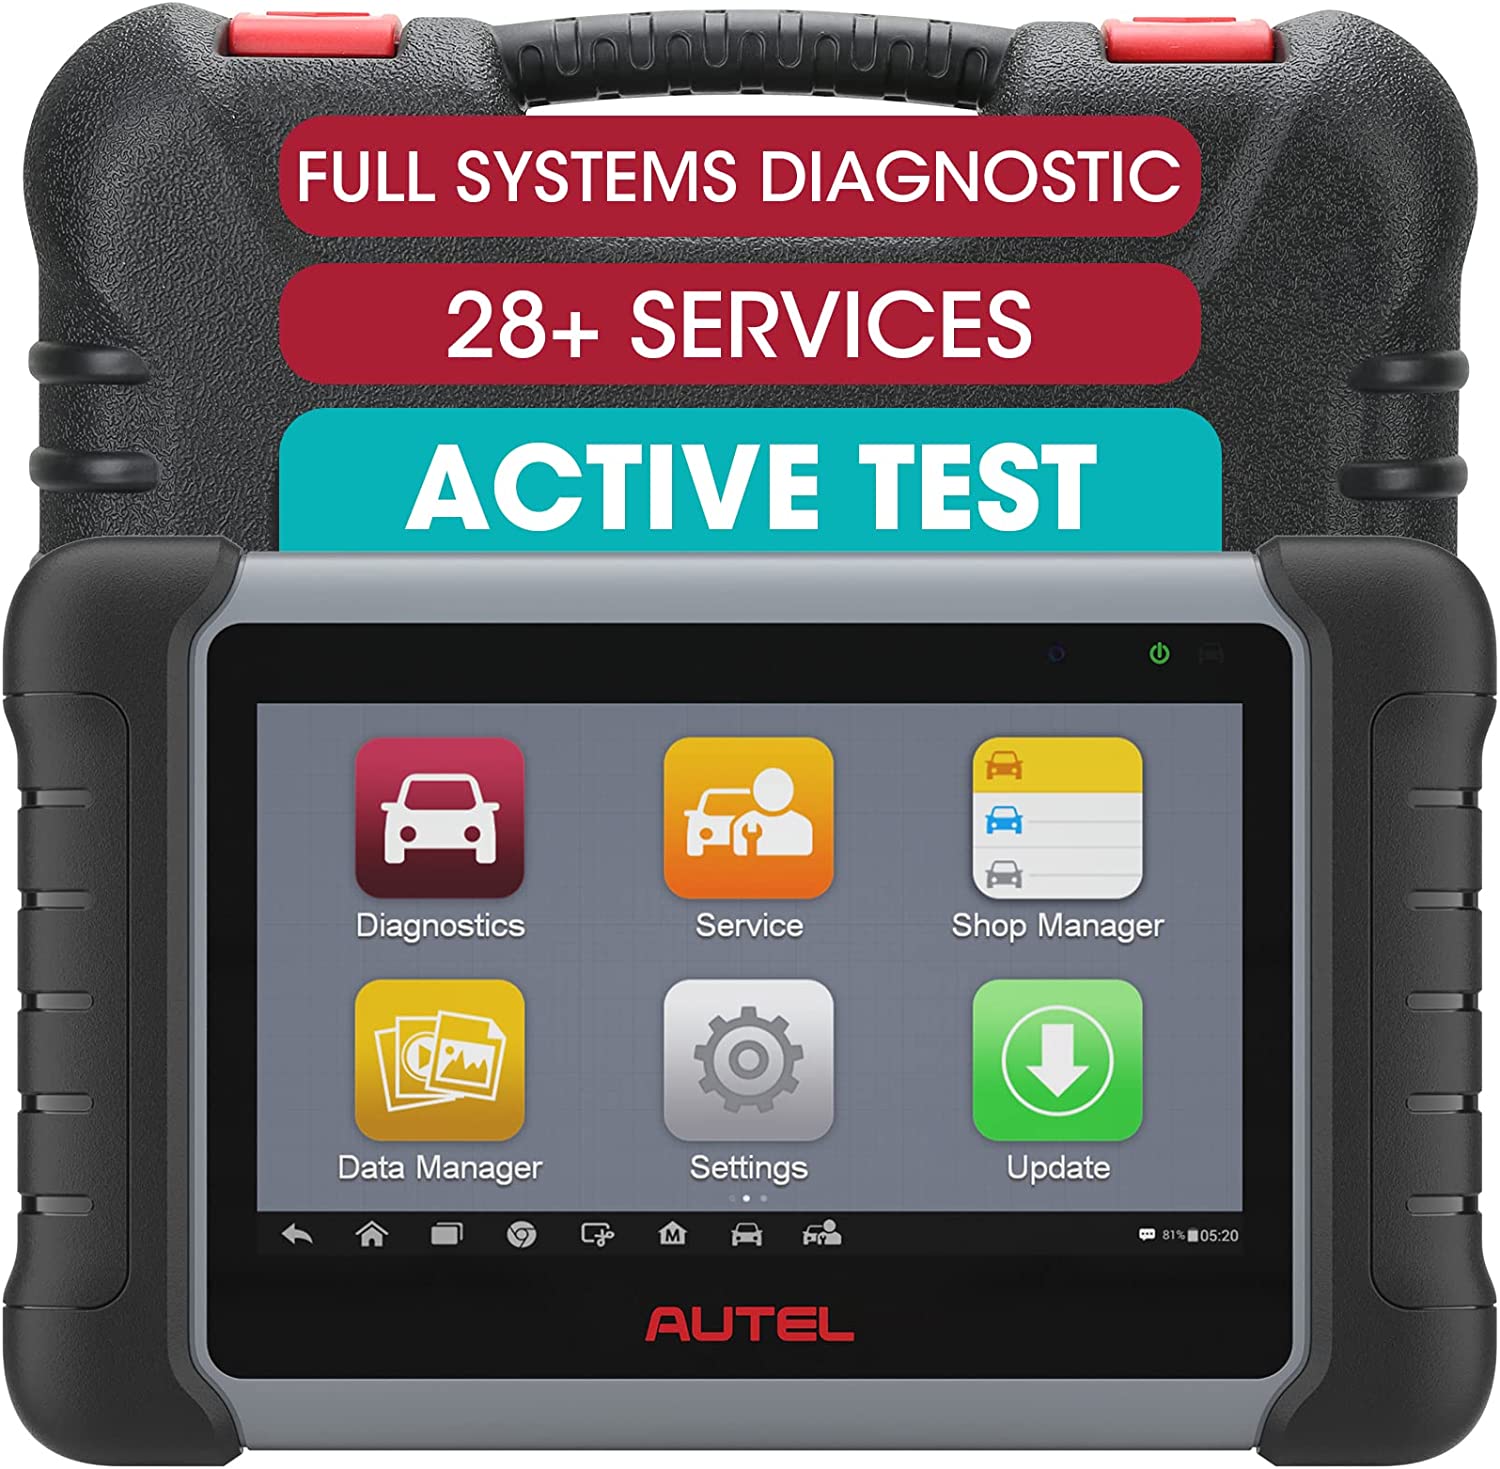 Full Systems diagnostic 28+ service Autel MK808Z